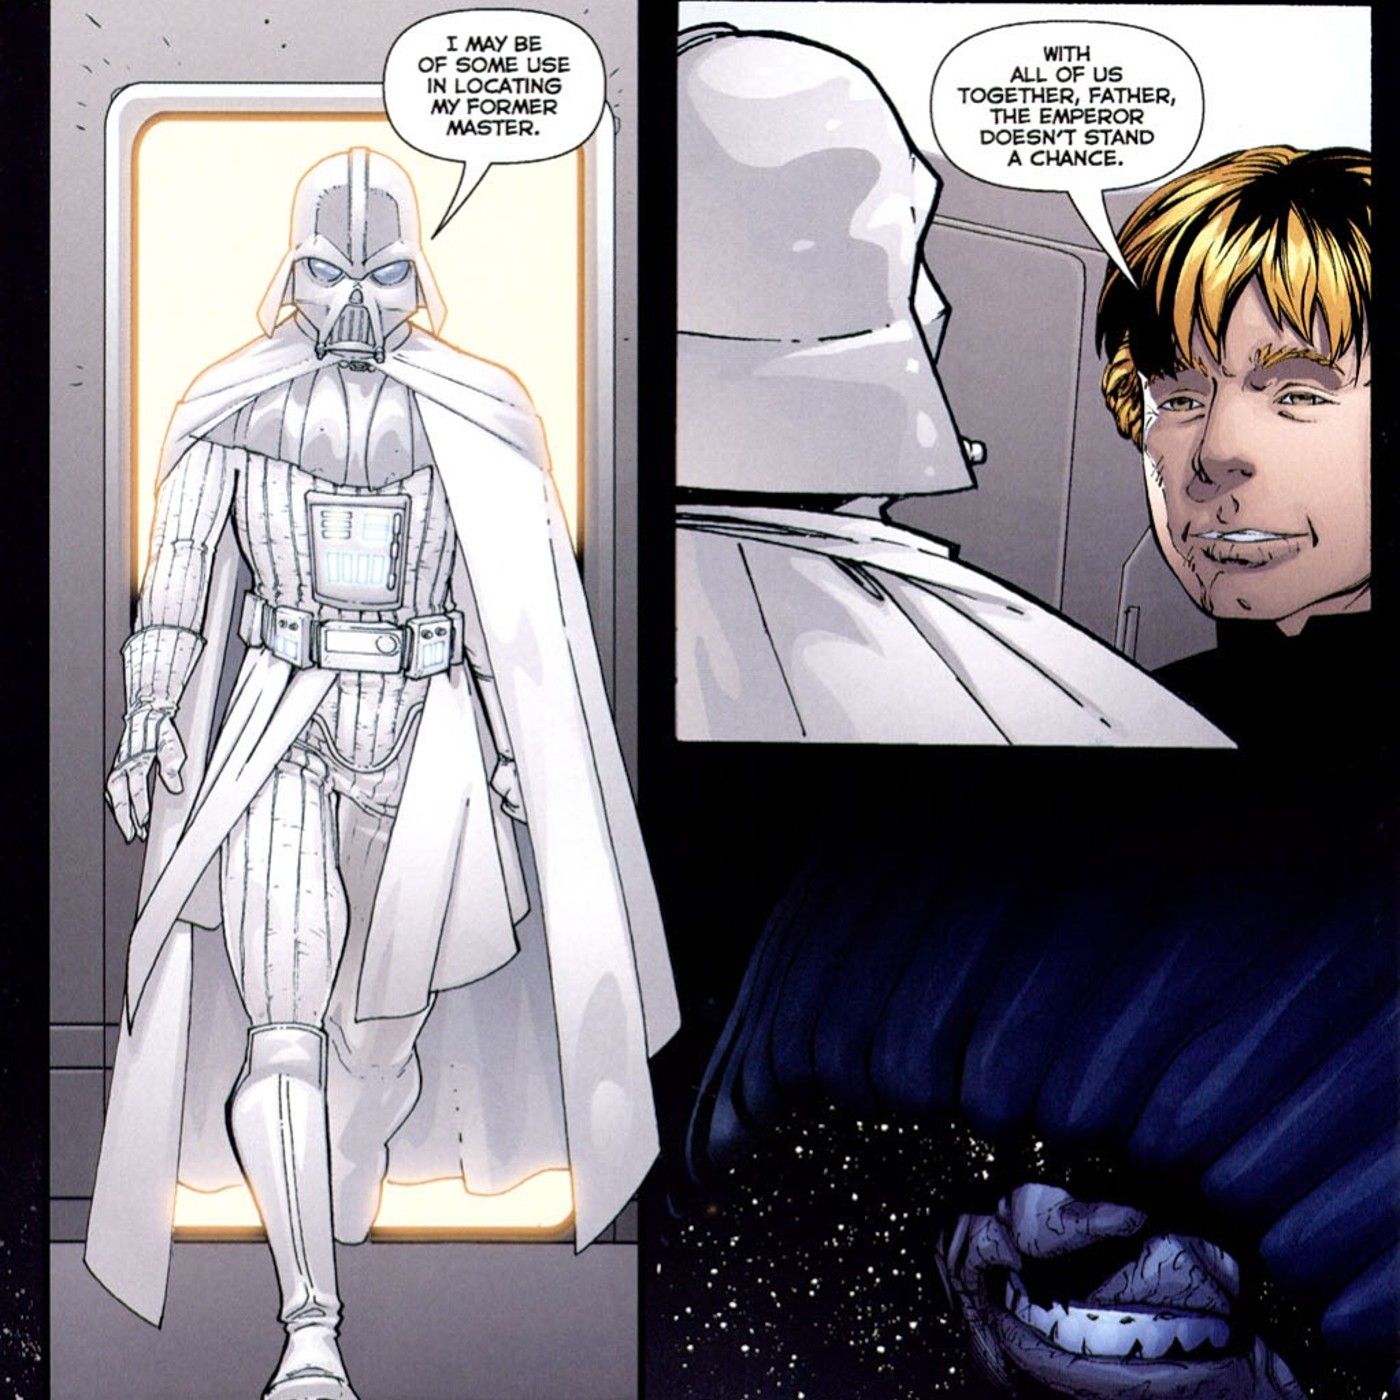 Darth Vader and Luke swear to find Palpatine together